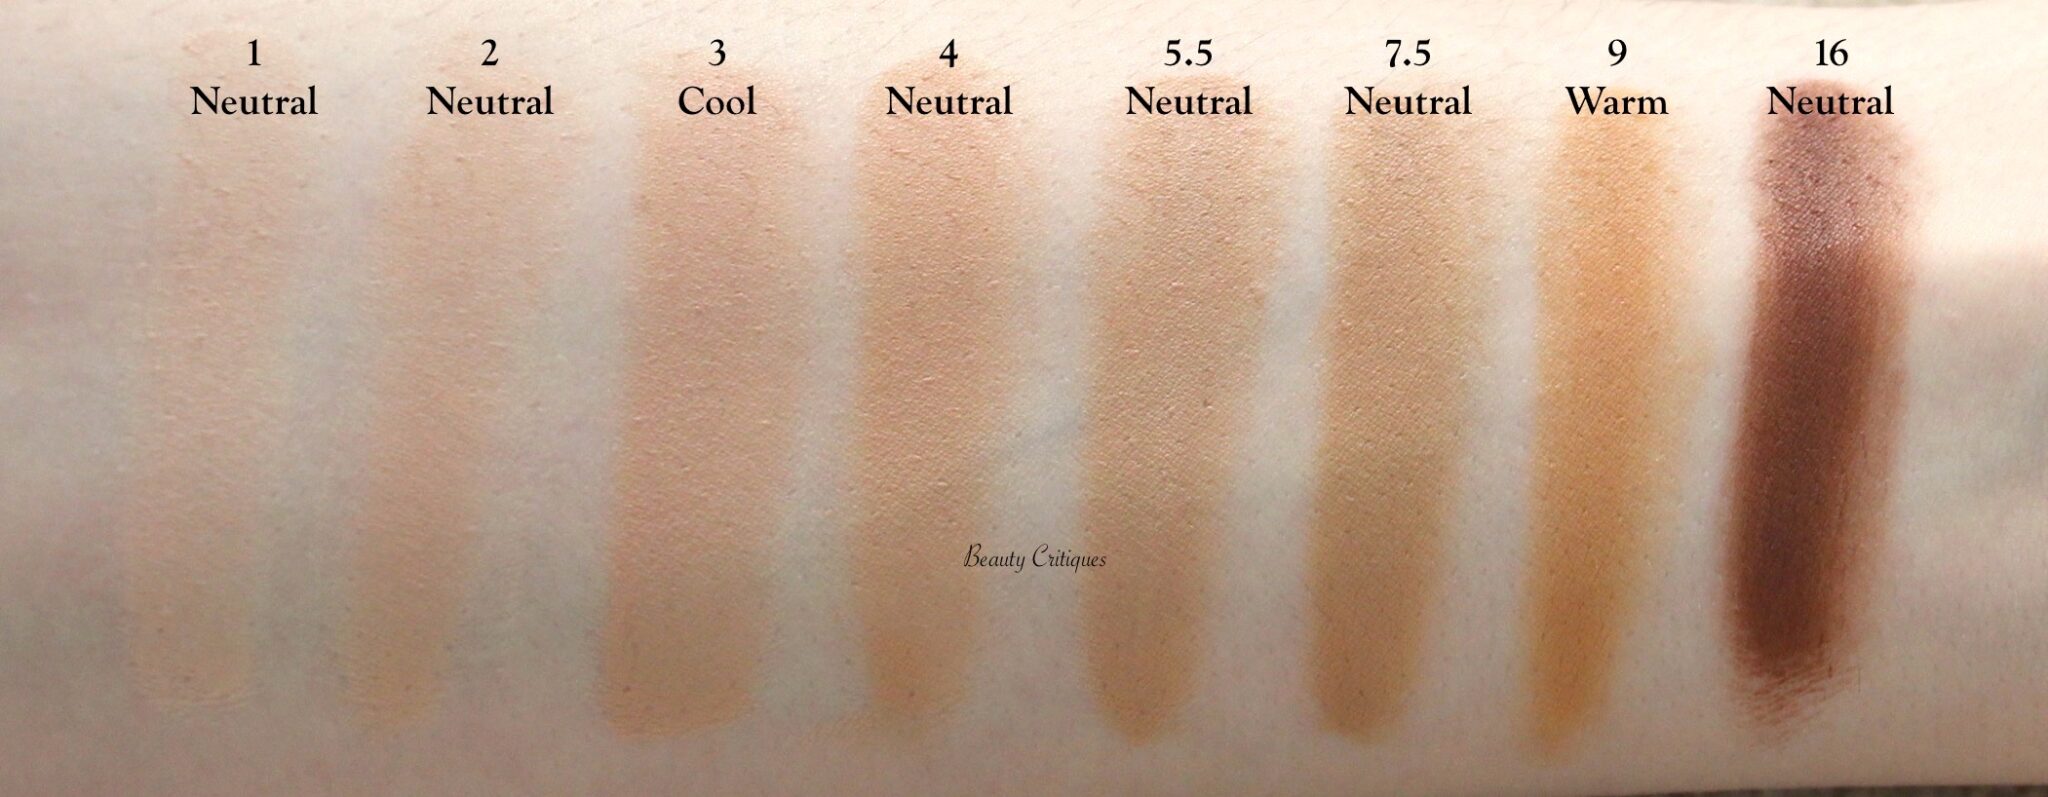 charlotte tilbury airbrush flawless foundation mature skin